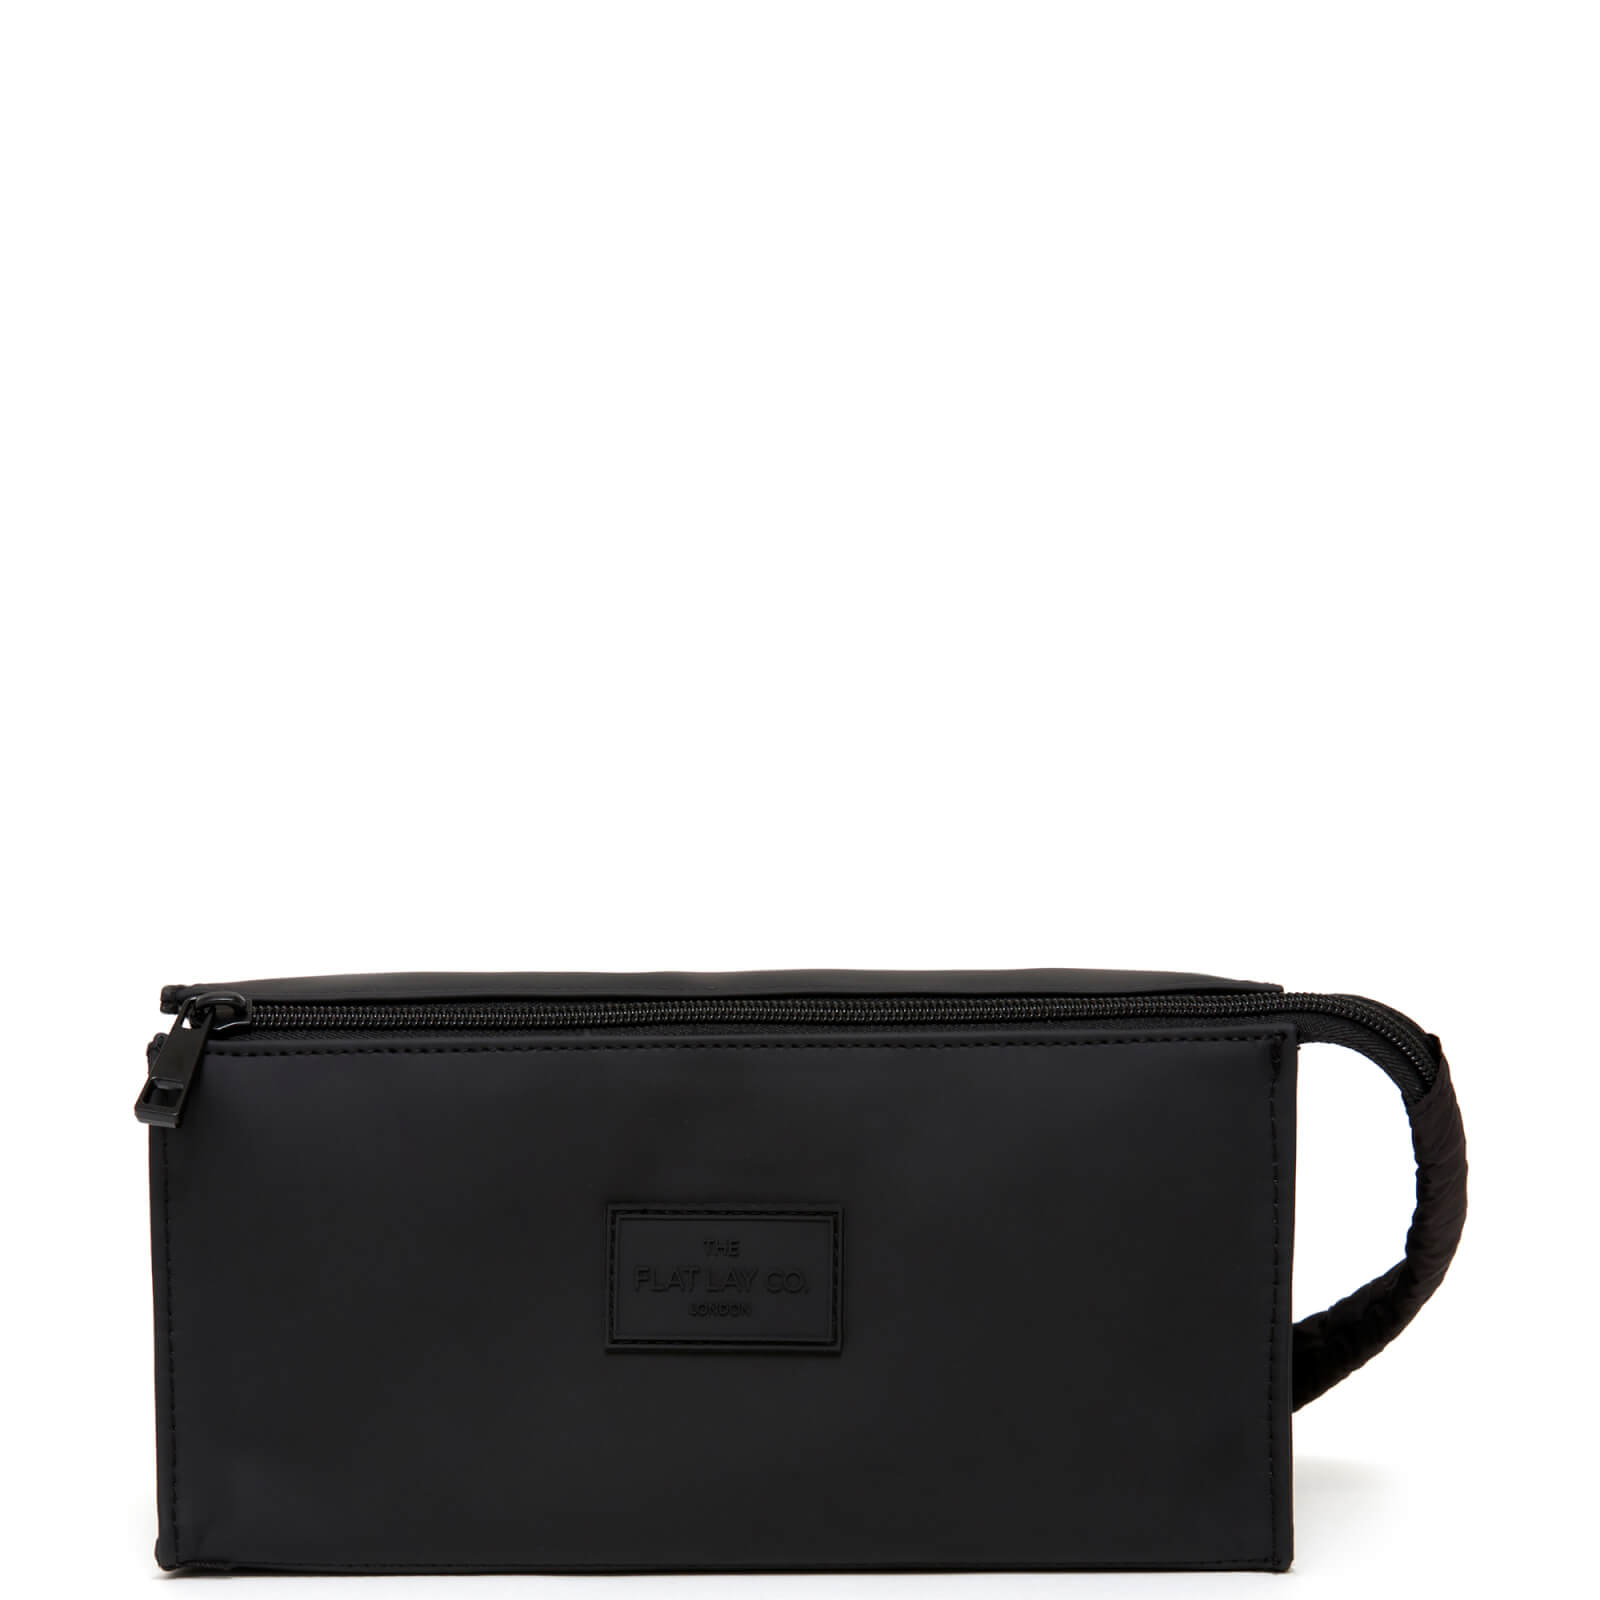 The Flat Lay Co. Unisex Box Sponge Bag in Black